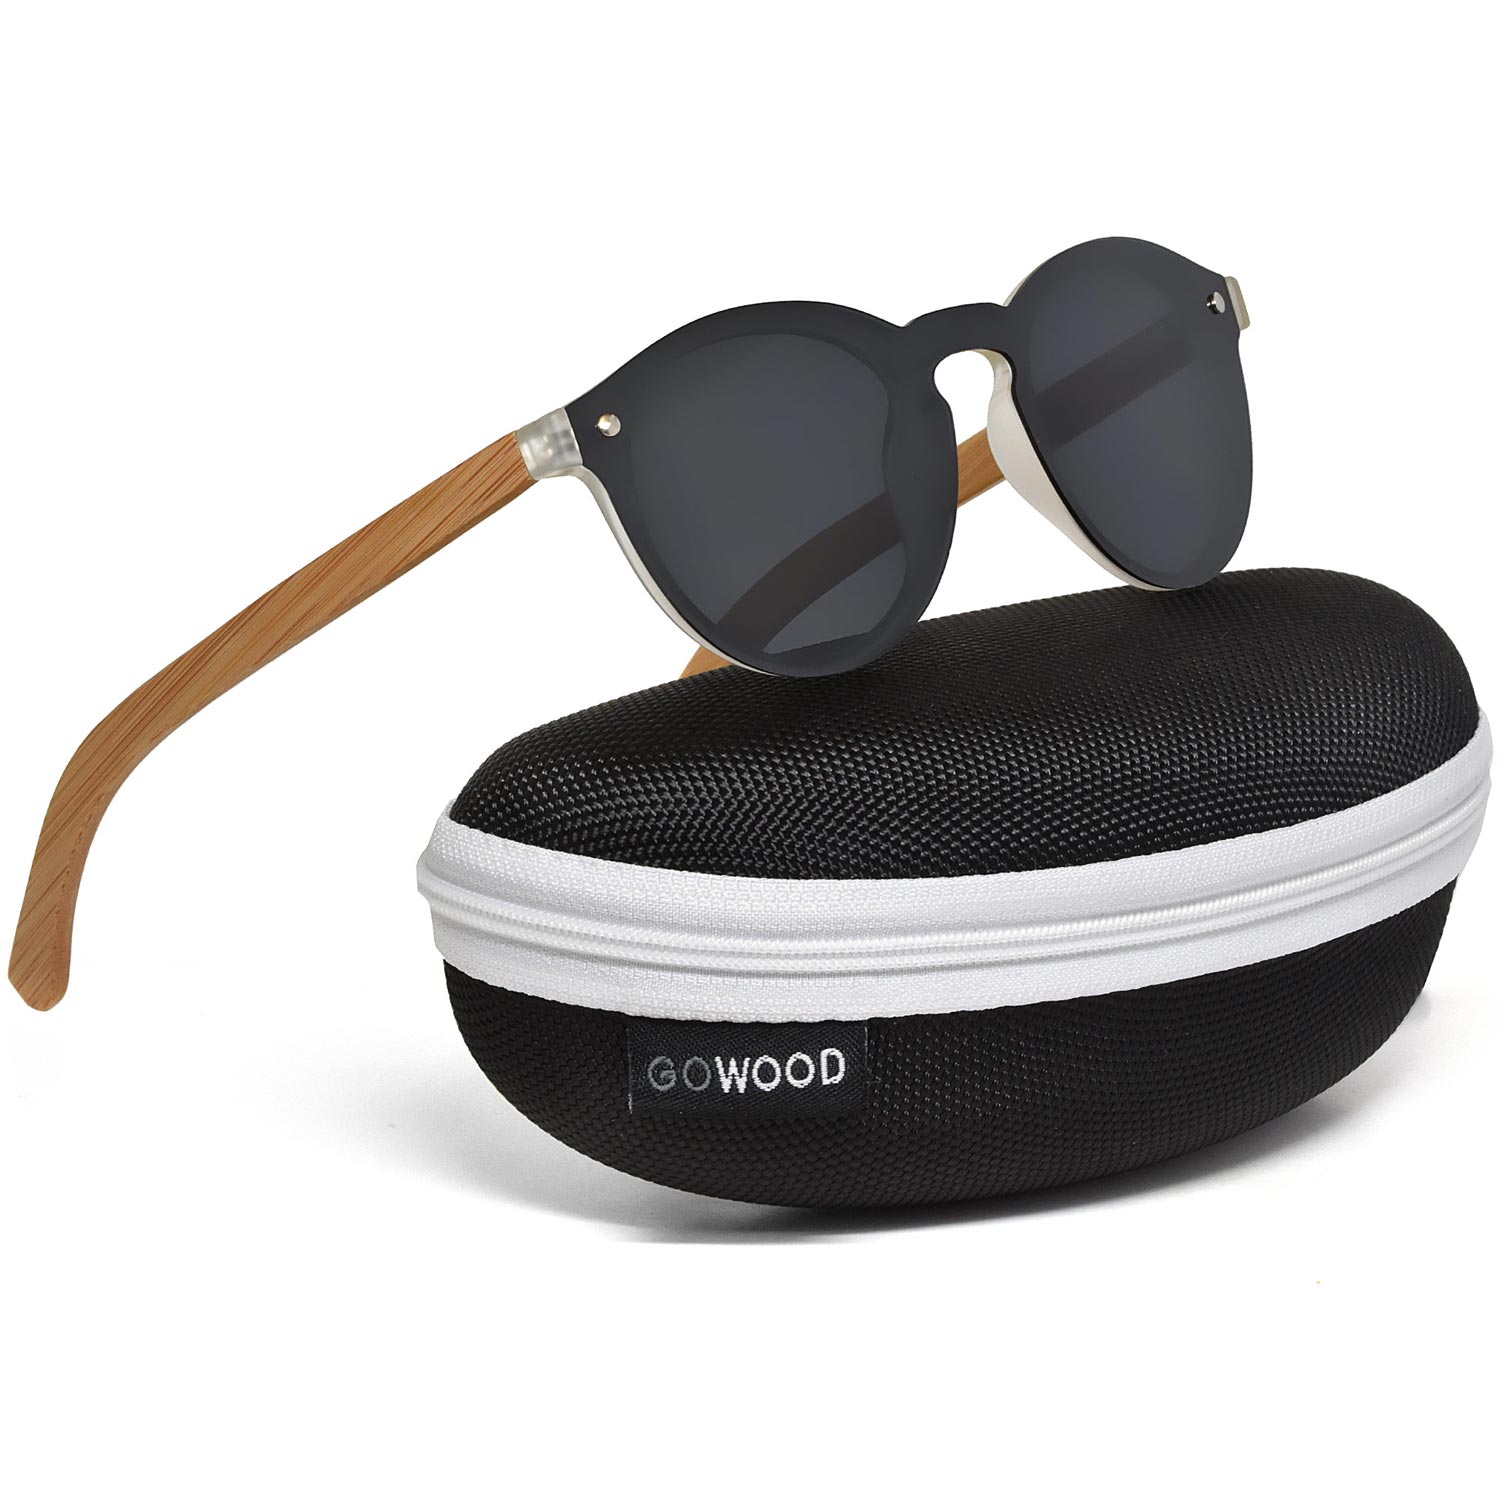 Round bamboo wood sunglasses black polarized lenses zipper case